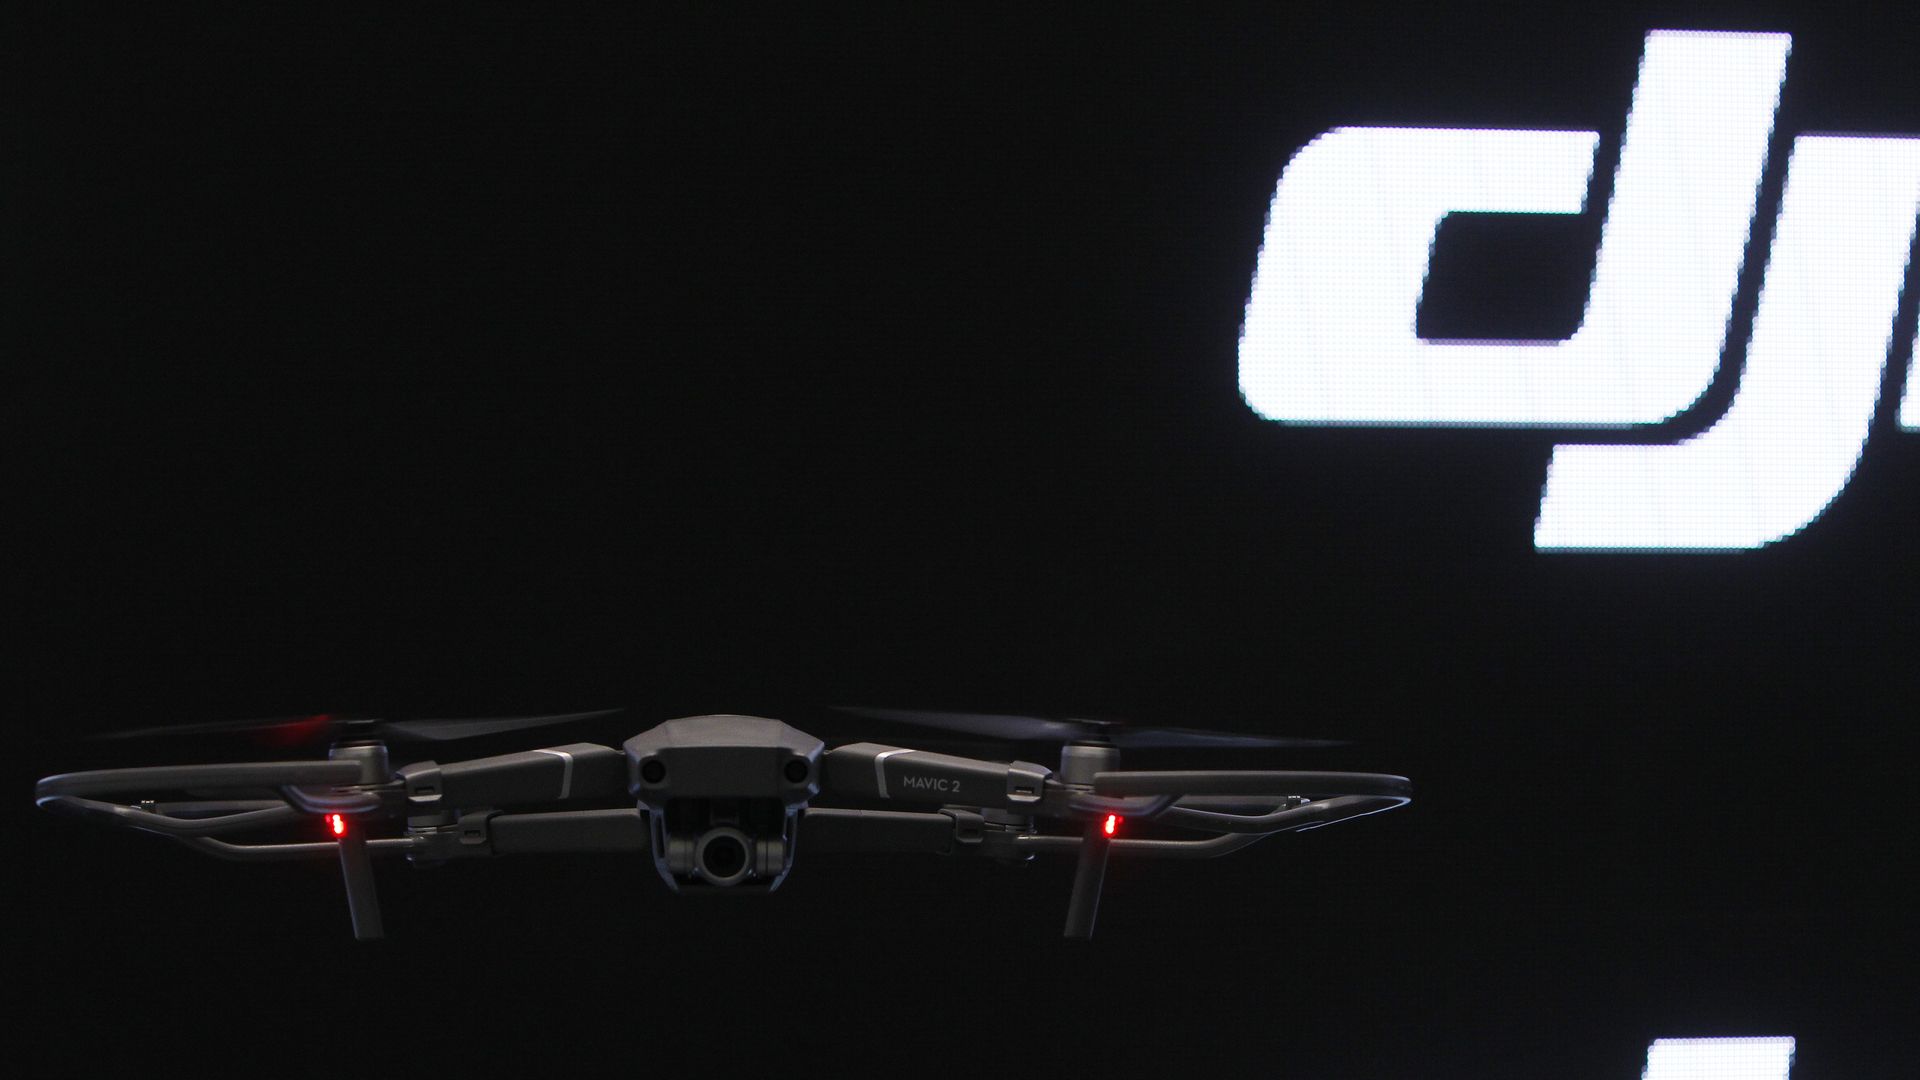 A Mavic 2 drone in front of a DJI logo